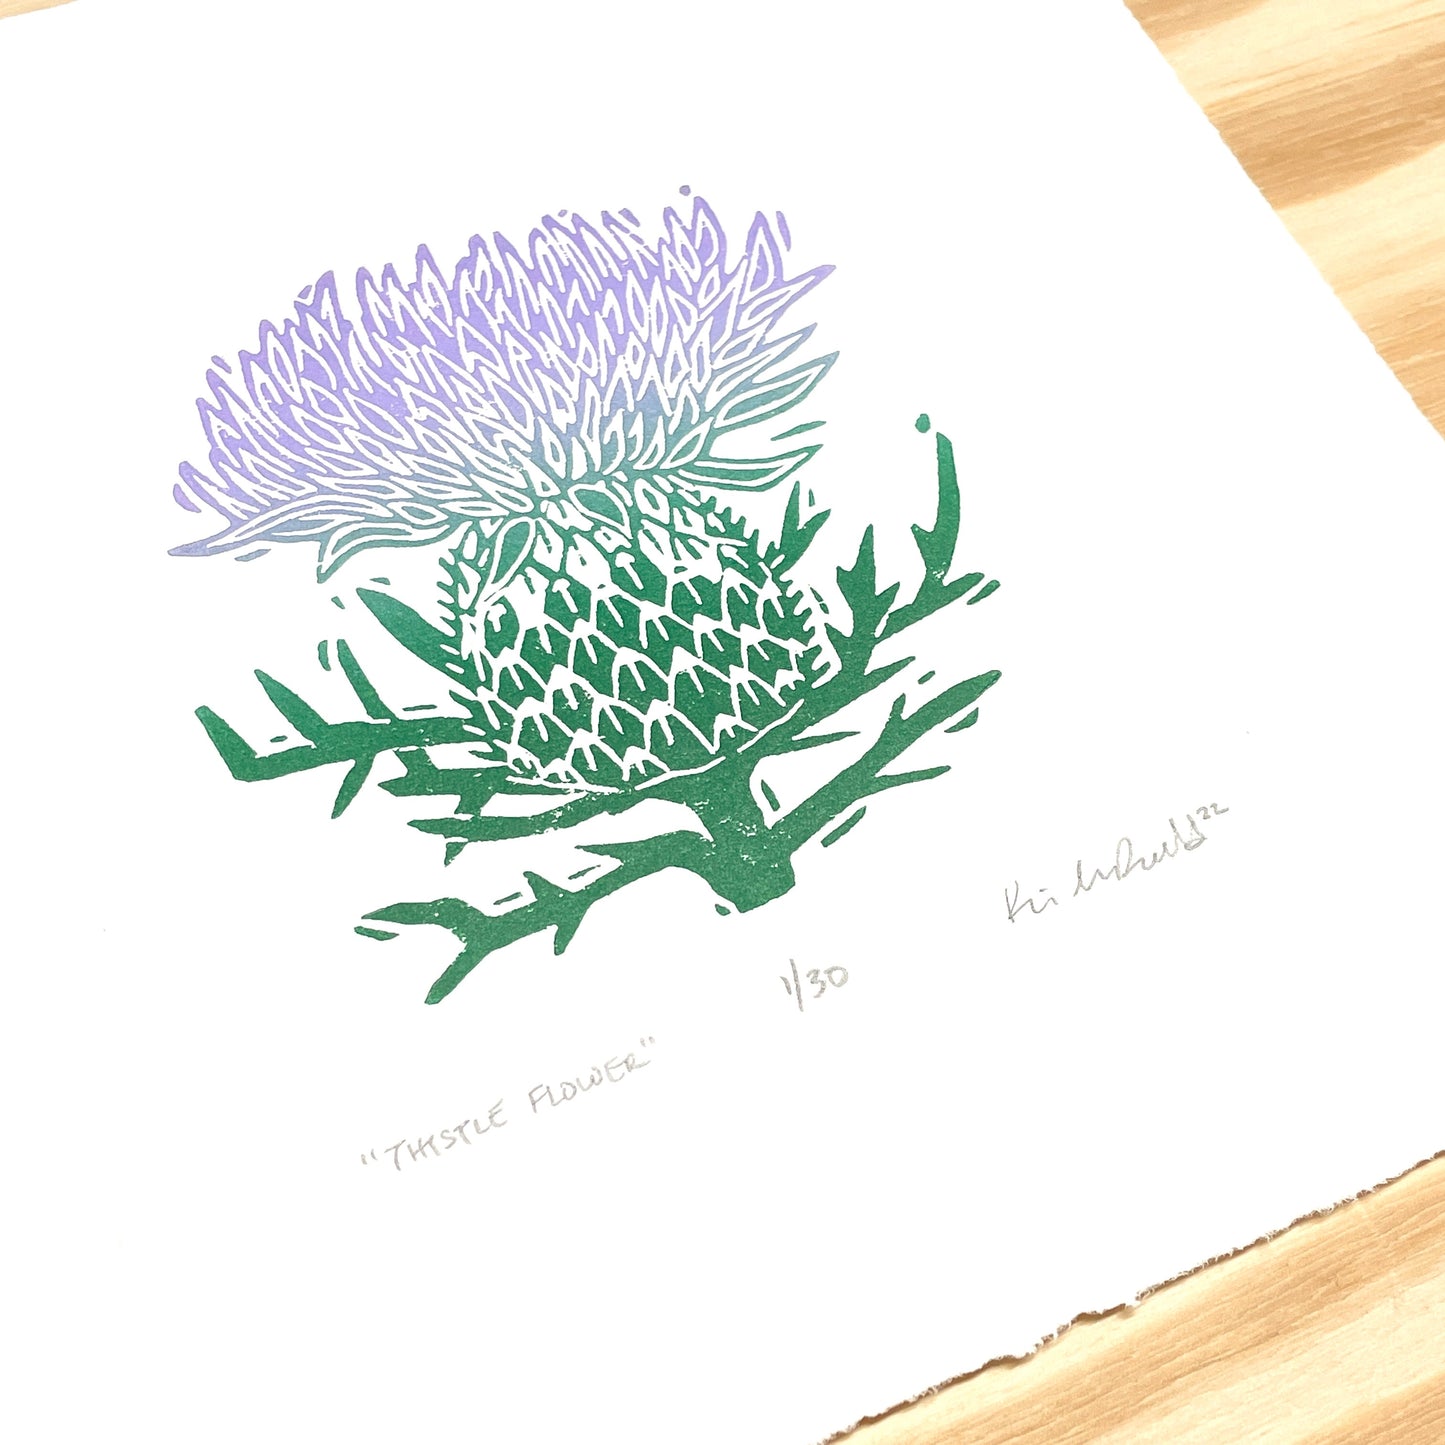 Thistle Flower - woodblock print (8x8")